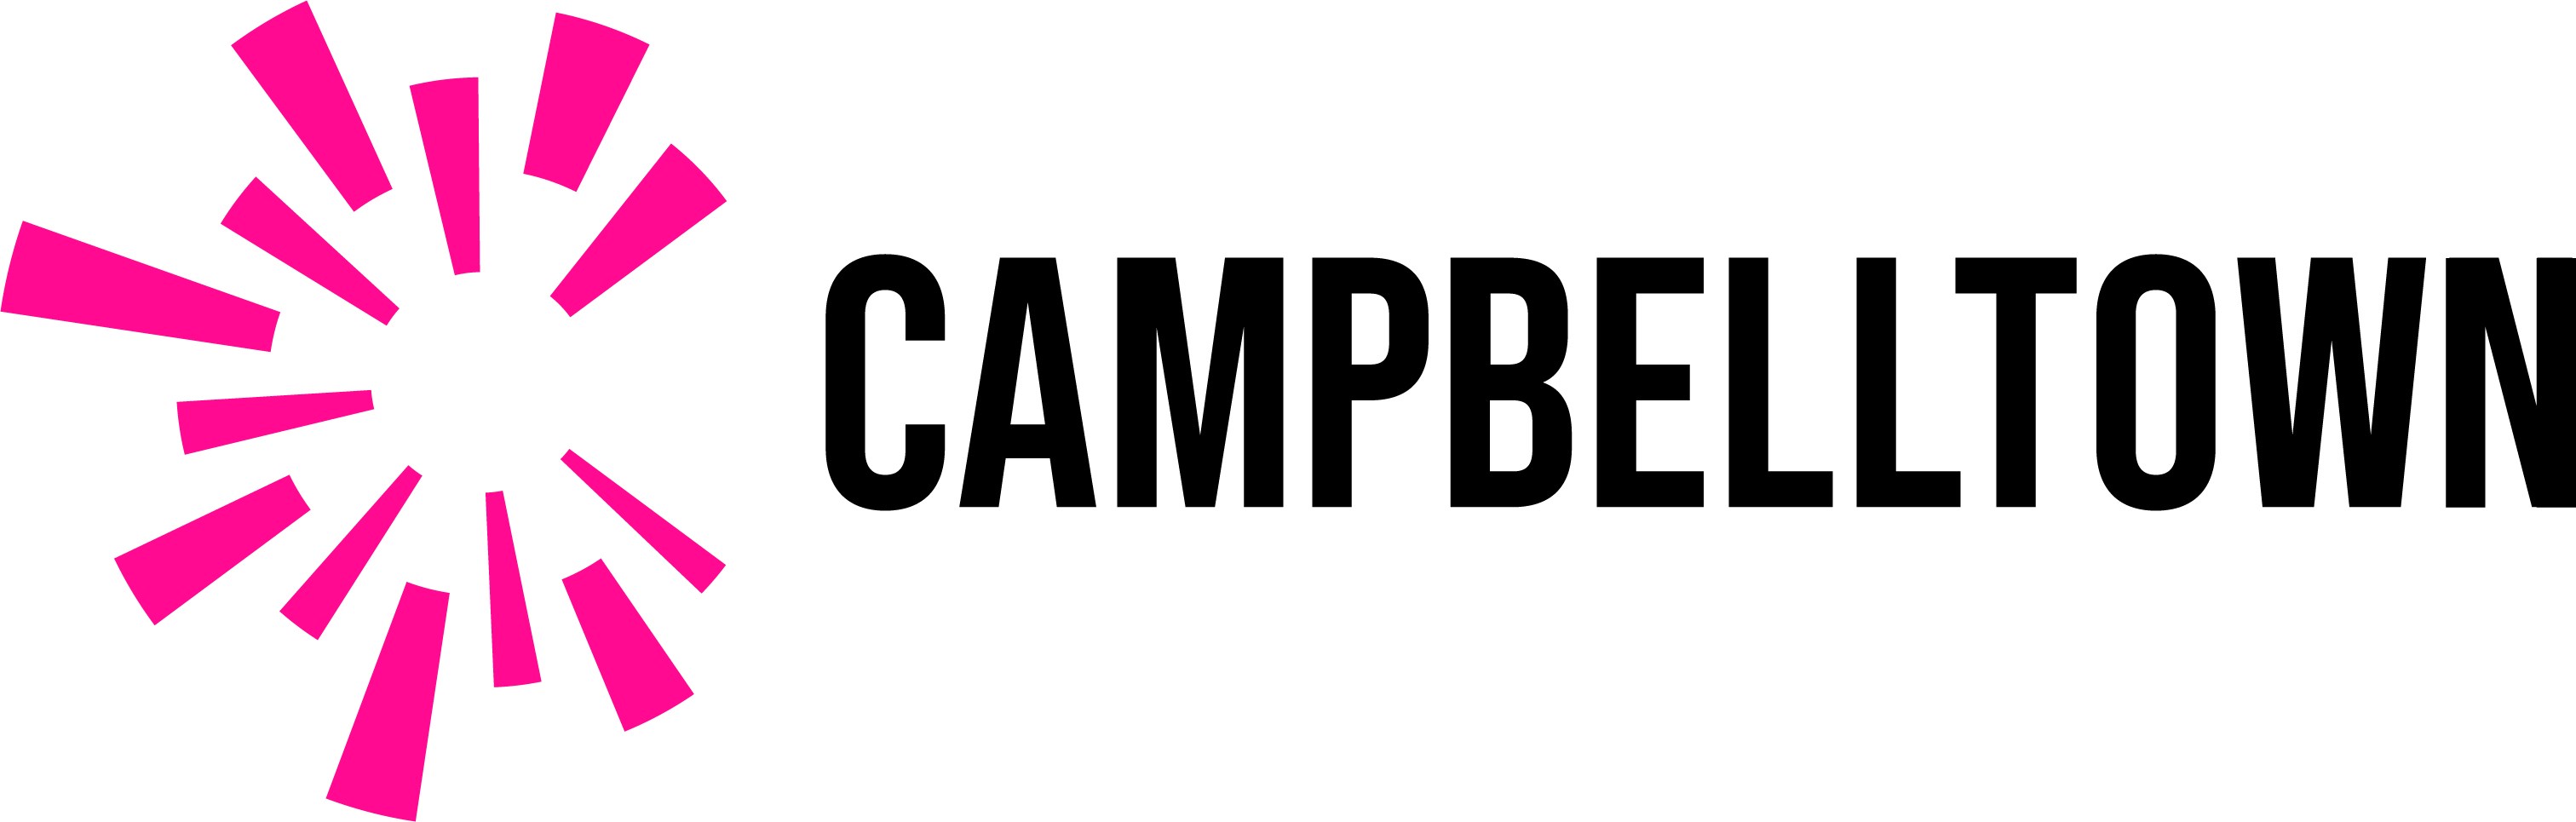 Campbelltown City Council, NSW logo